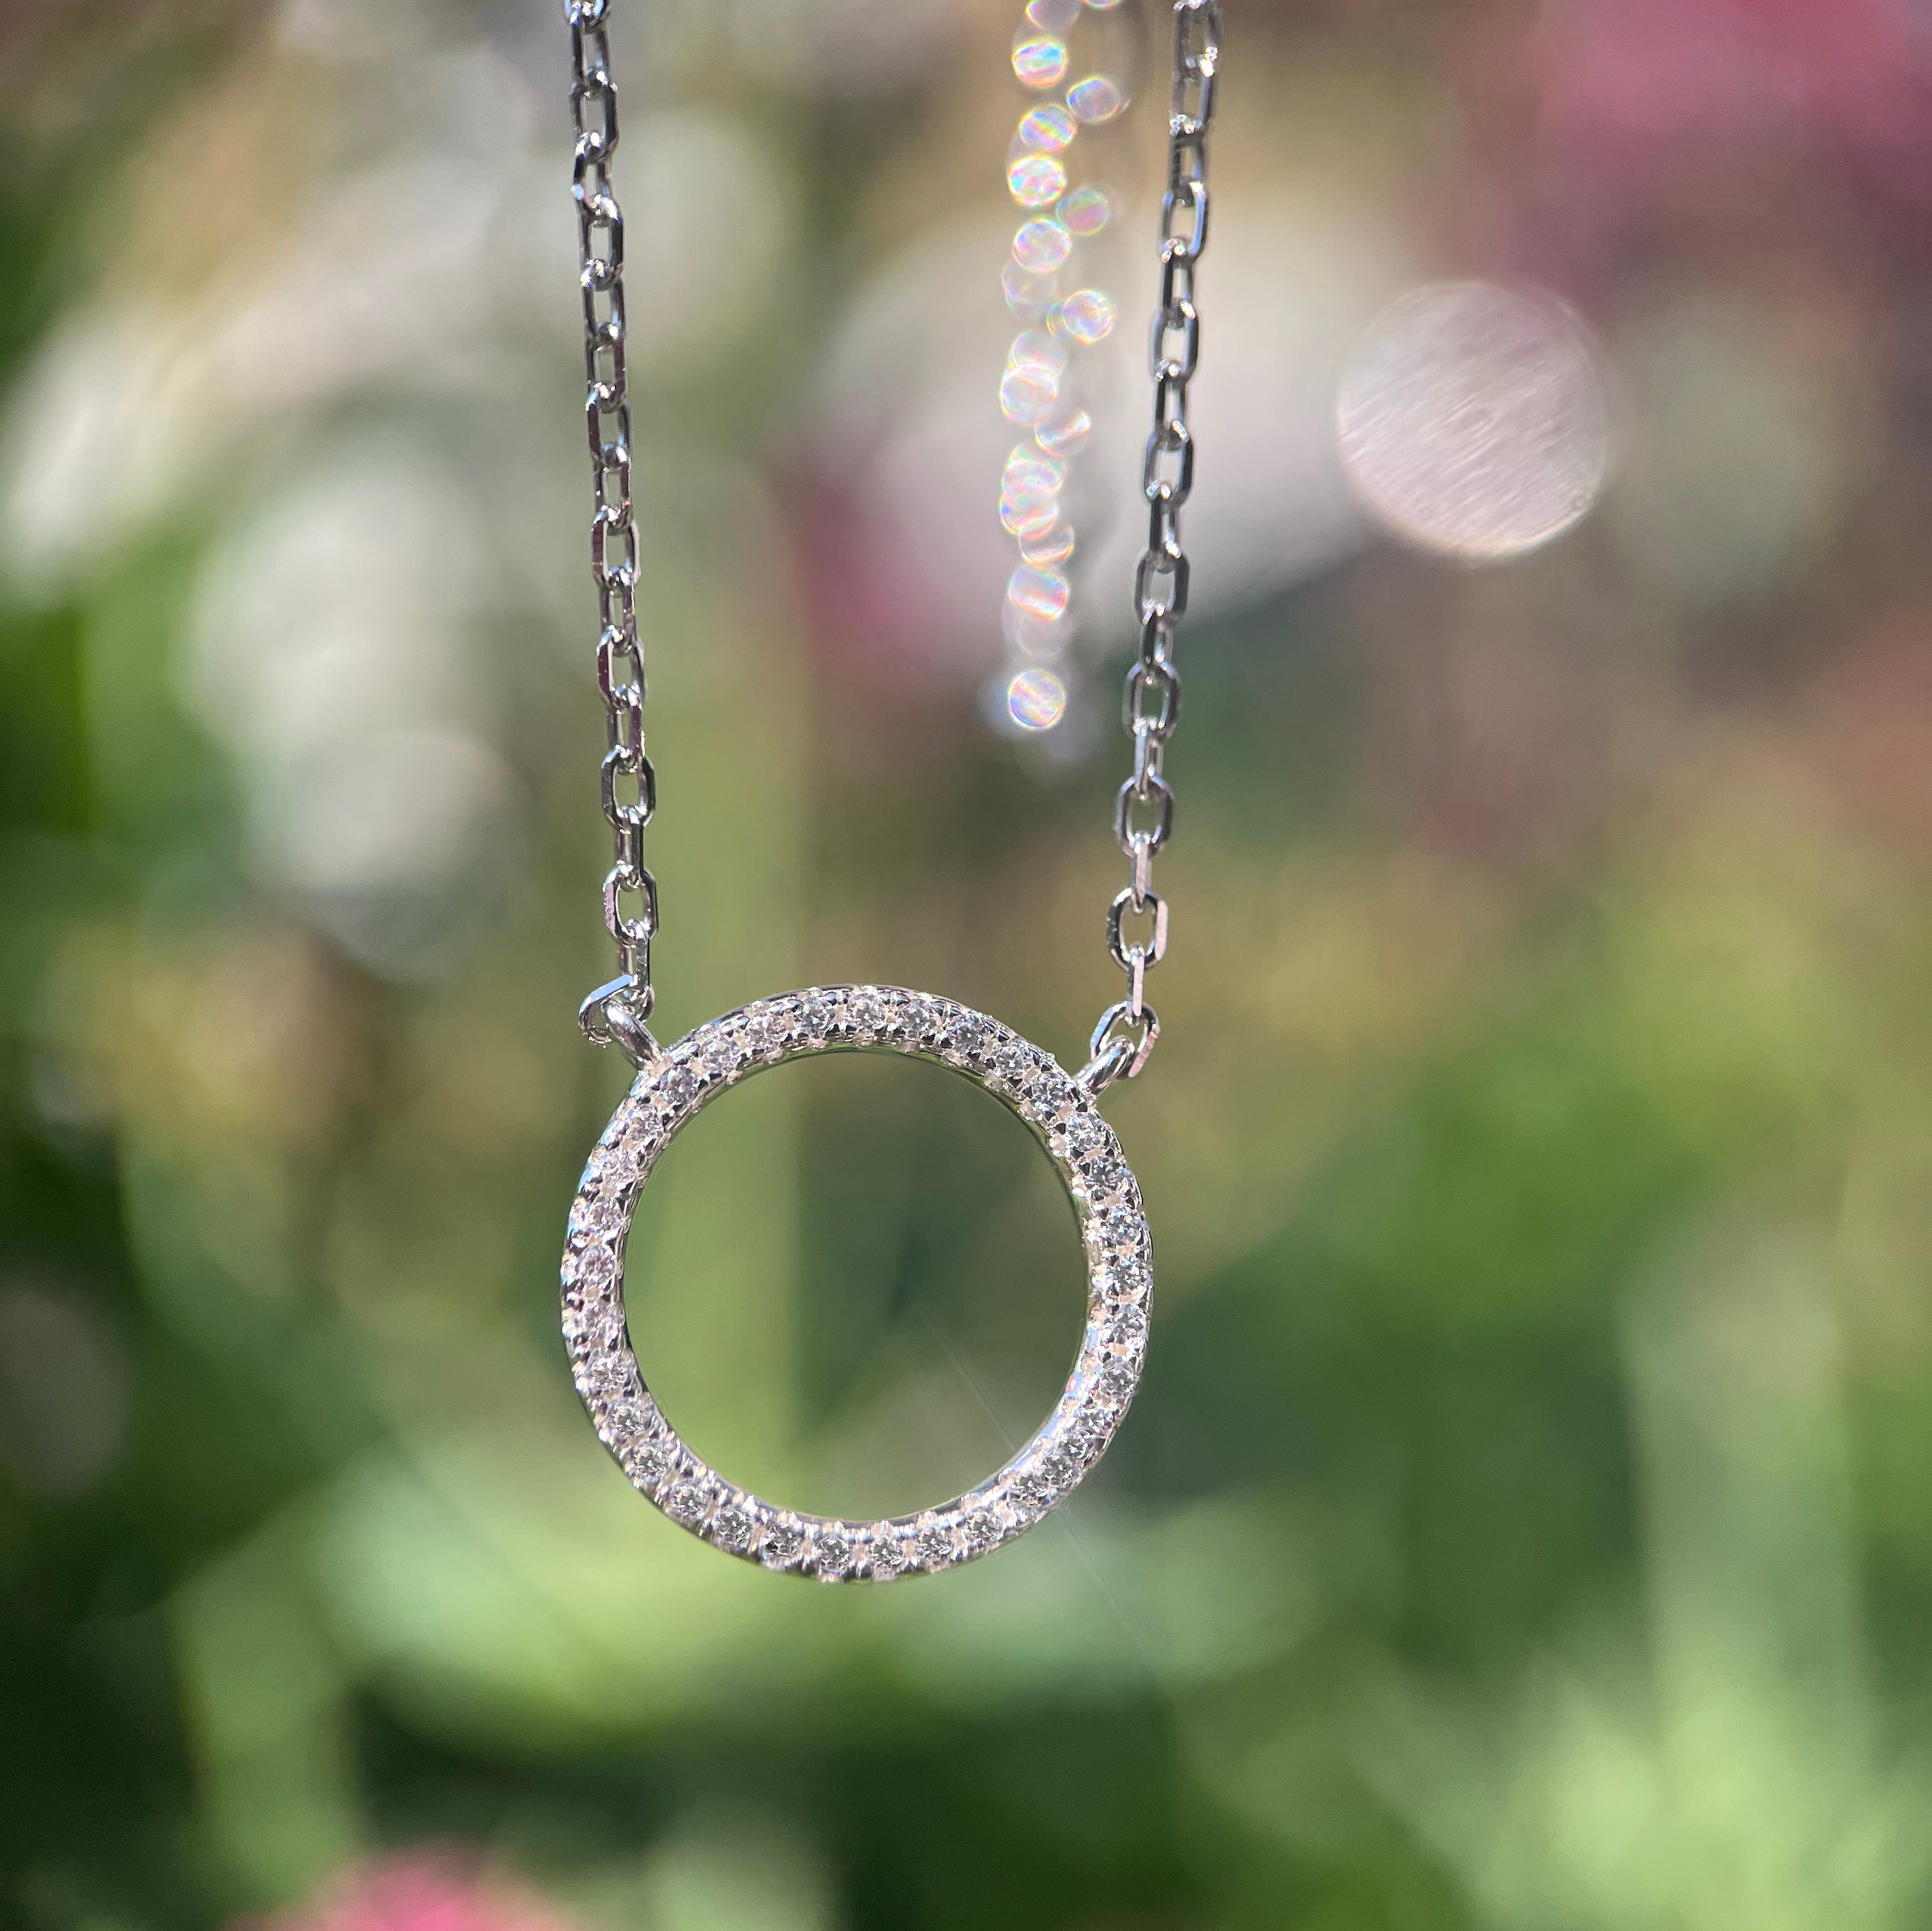 Jewelry | Crystal Circle Pendant Necklacef 925 Silver New | Poshmark